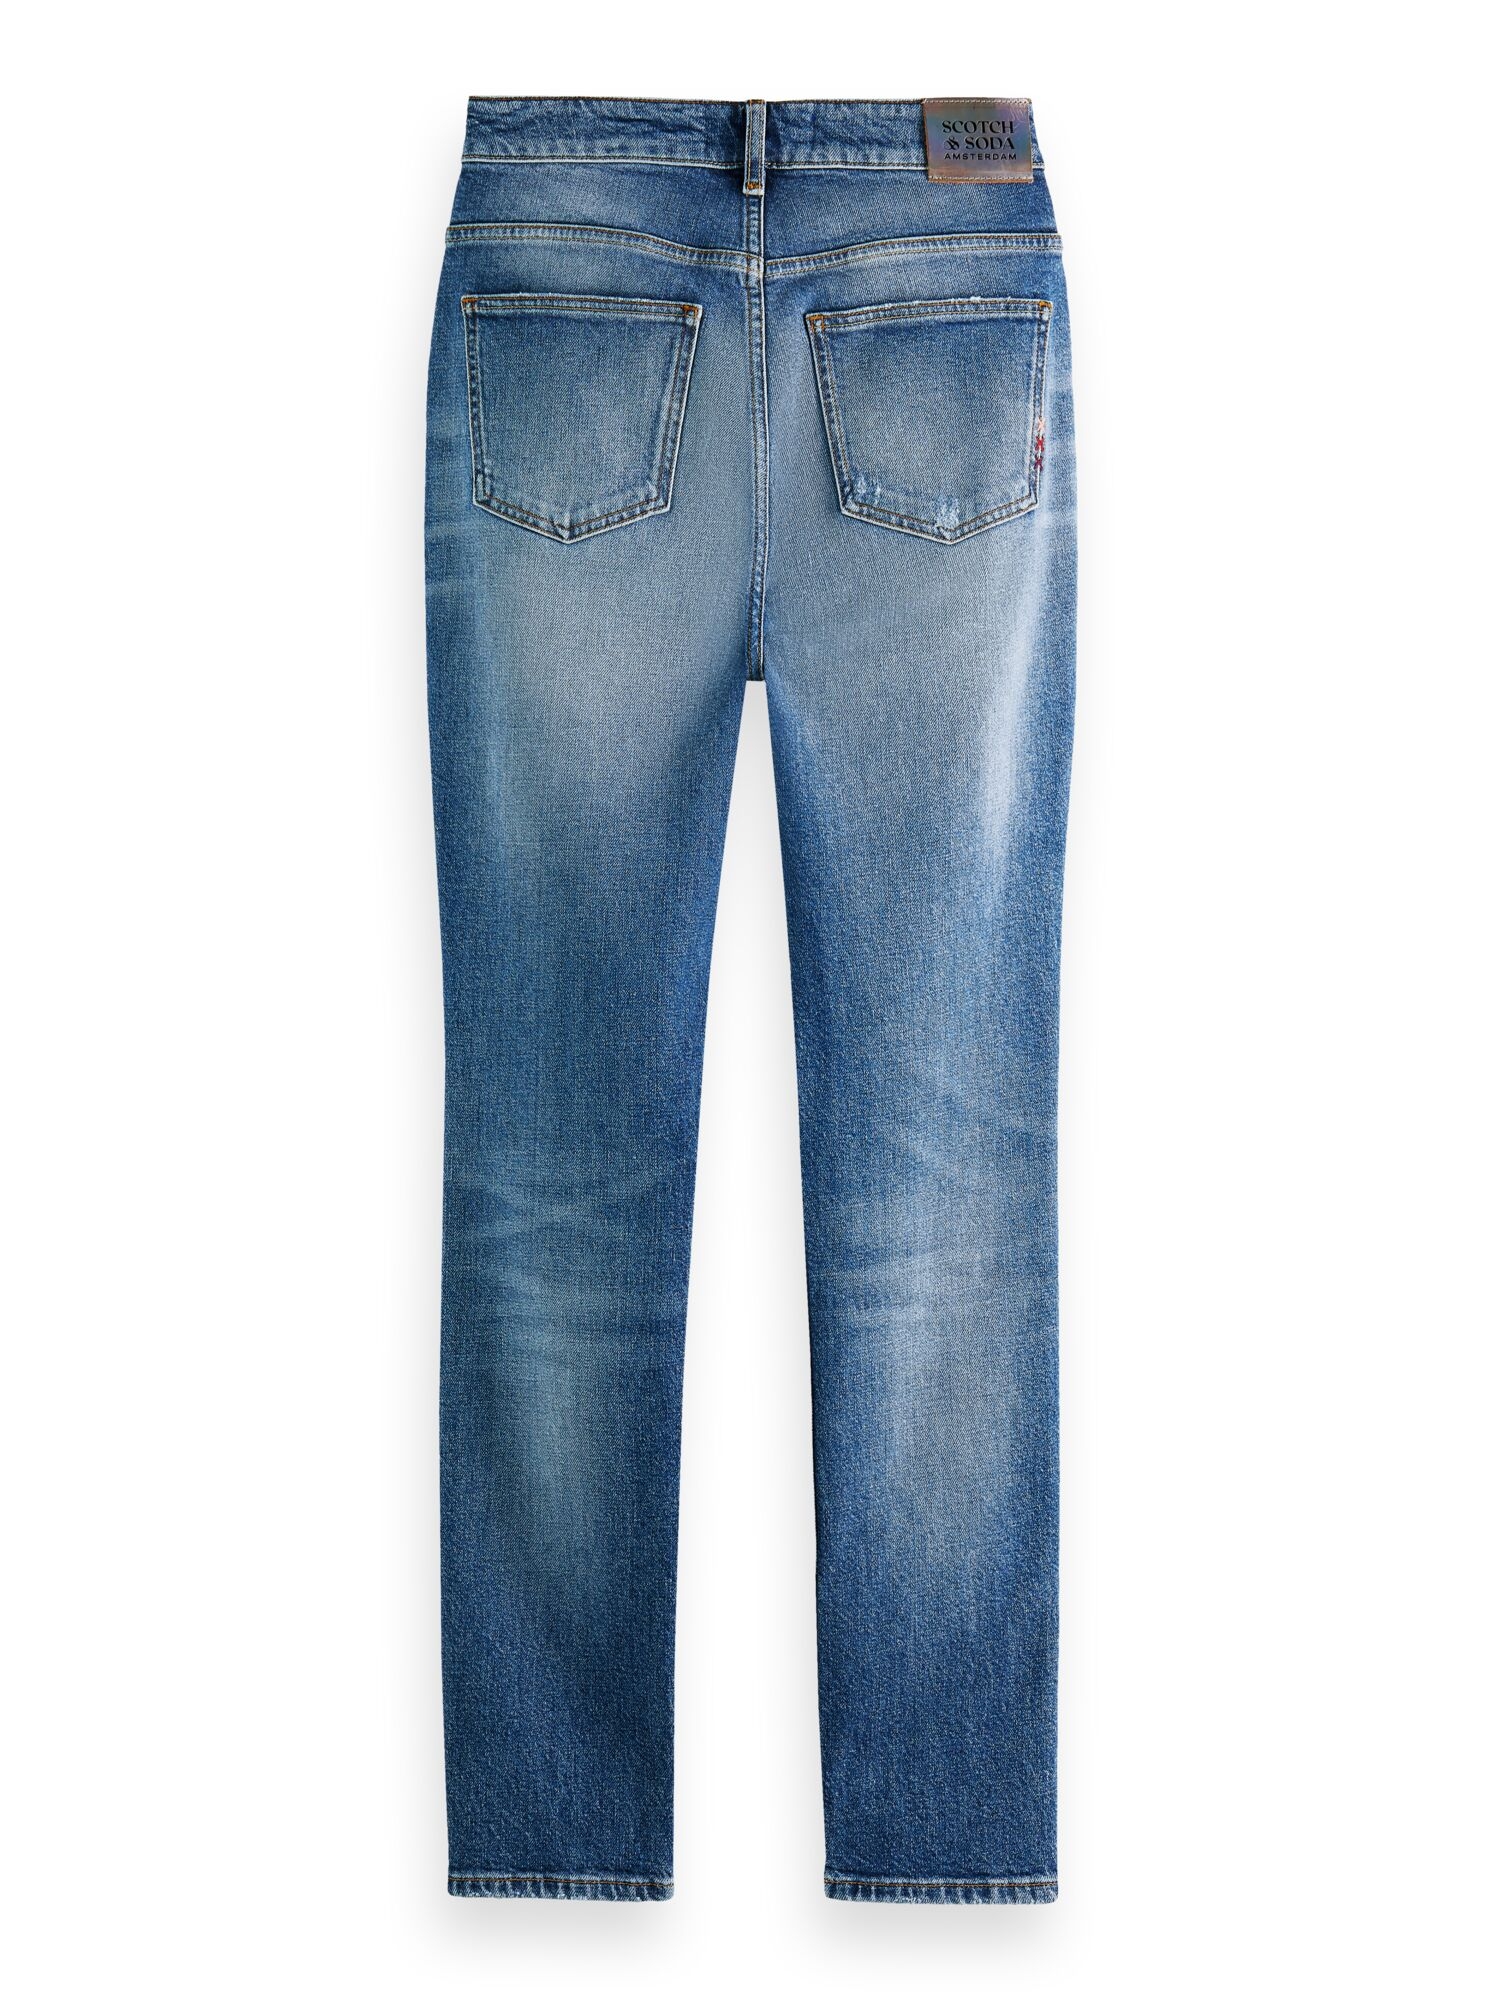 Nudie Men's Blue Organic Cotton Denim Jeans | eBay